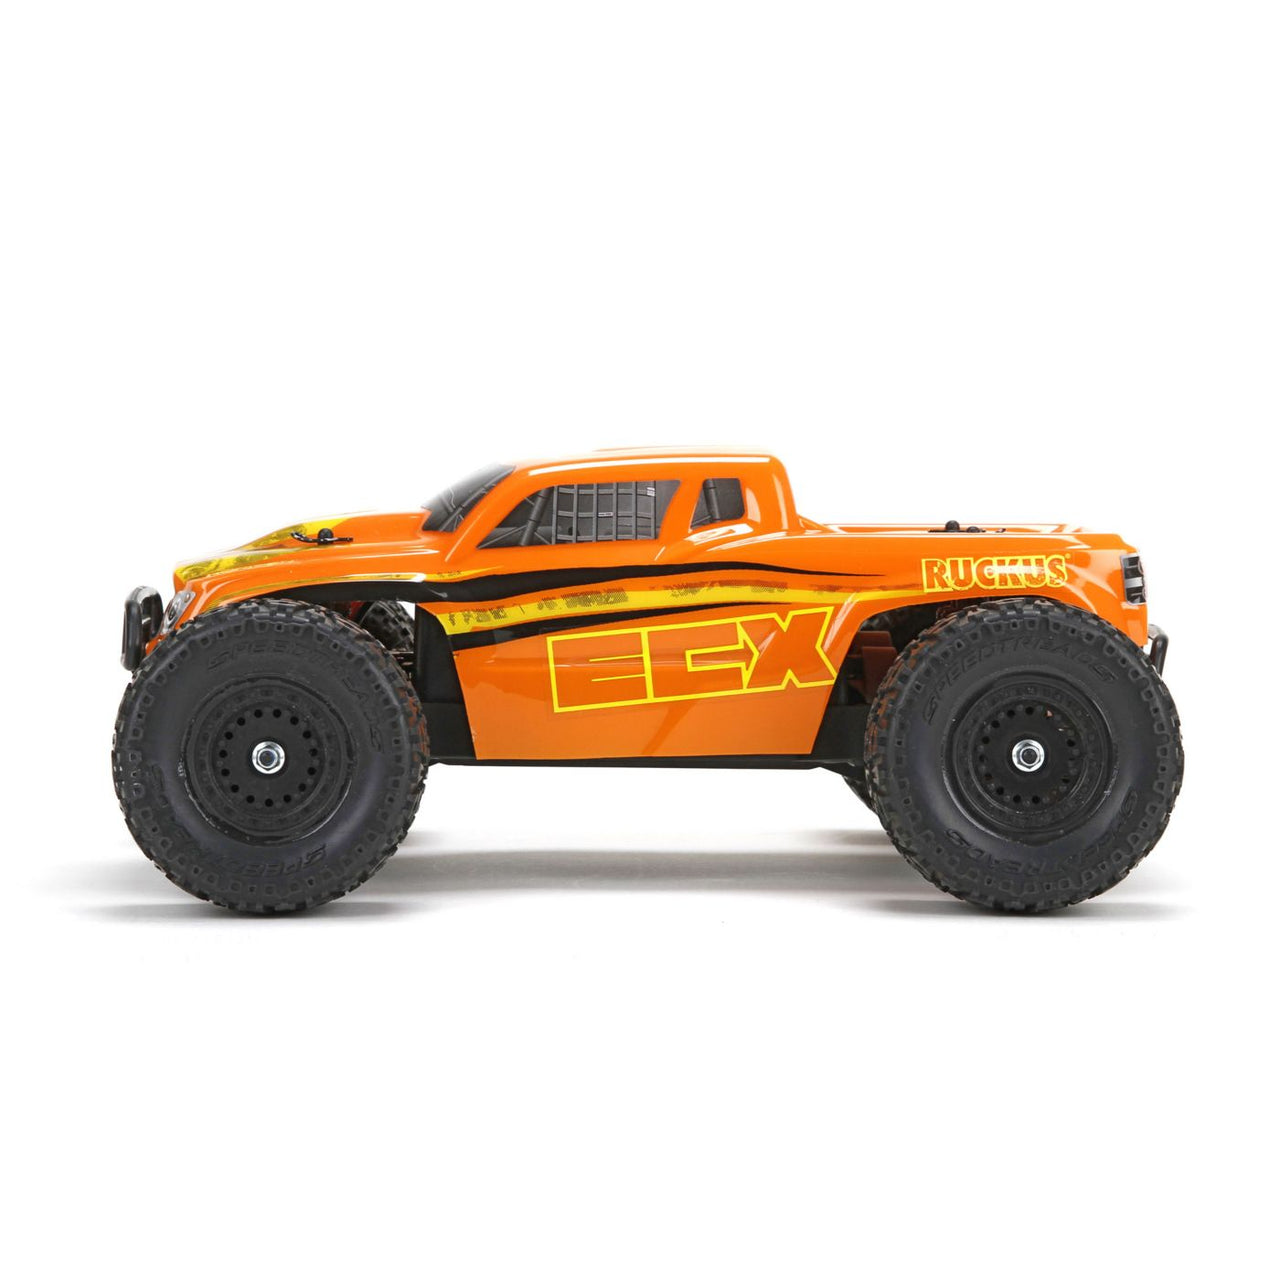 ECX01000T2 ECX Ruckus 1/18 4WD RTR, Naranja/Amarillo (solo recogida en tienda)